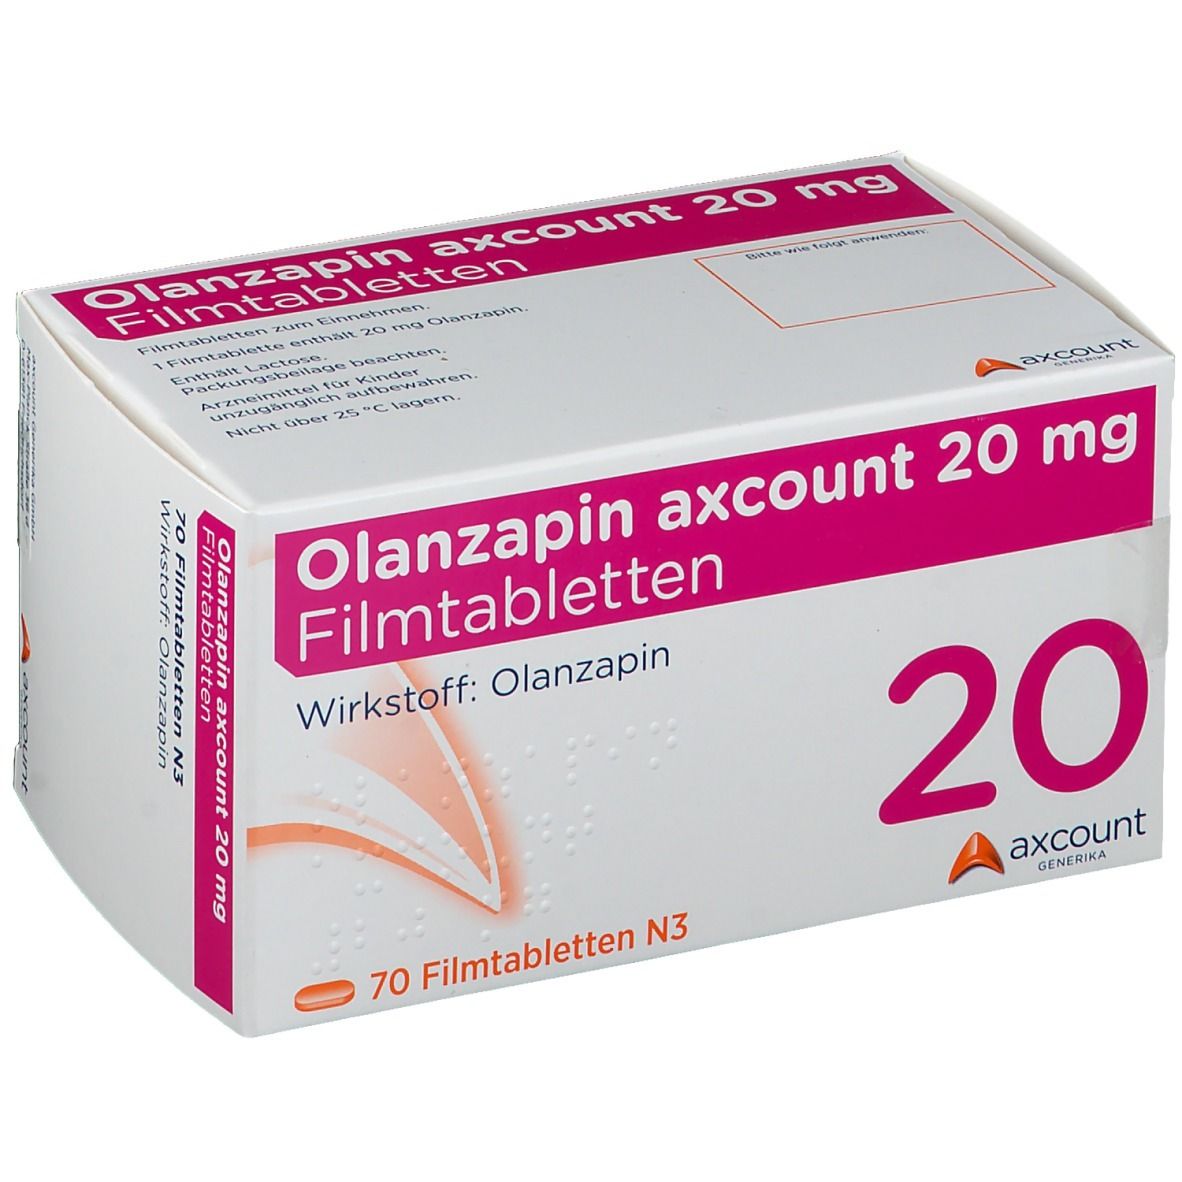 Olanzapin axcount 20 mg